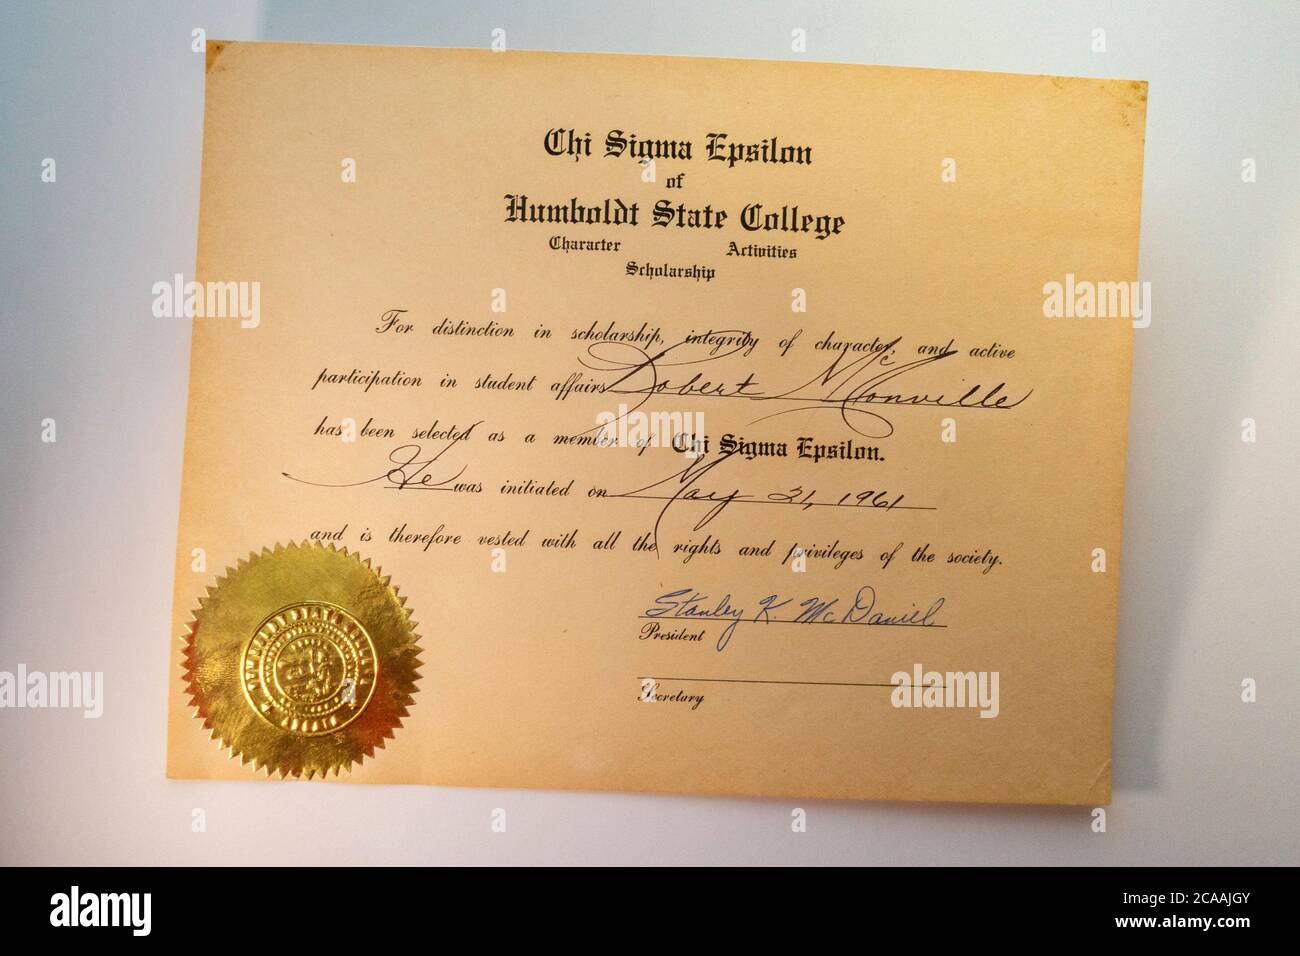 Humboldt state College Diploma, USA 1961 Foto Stock